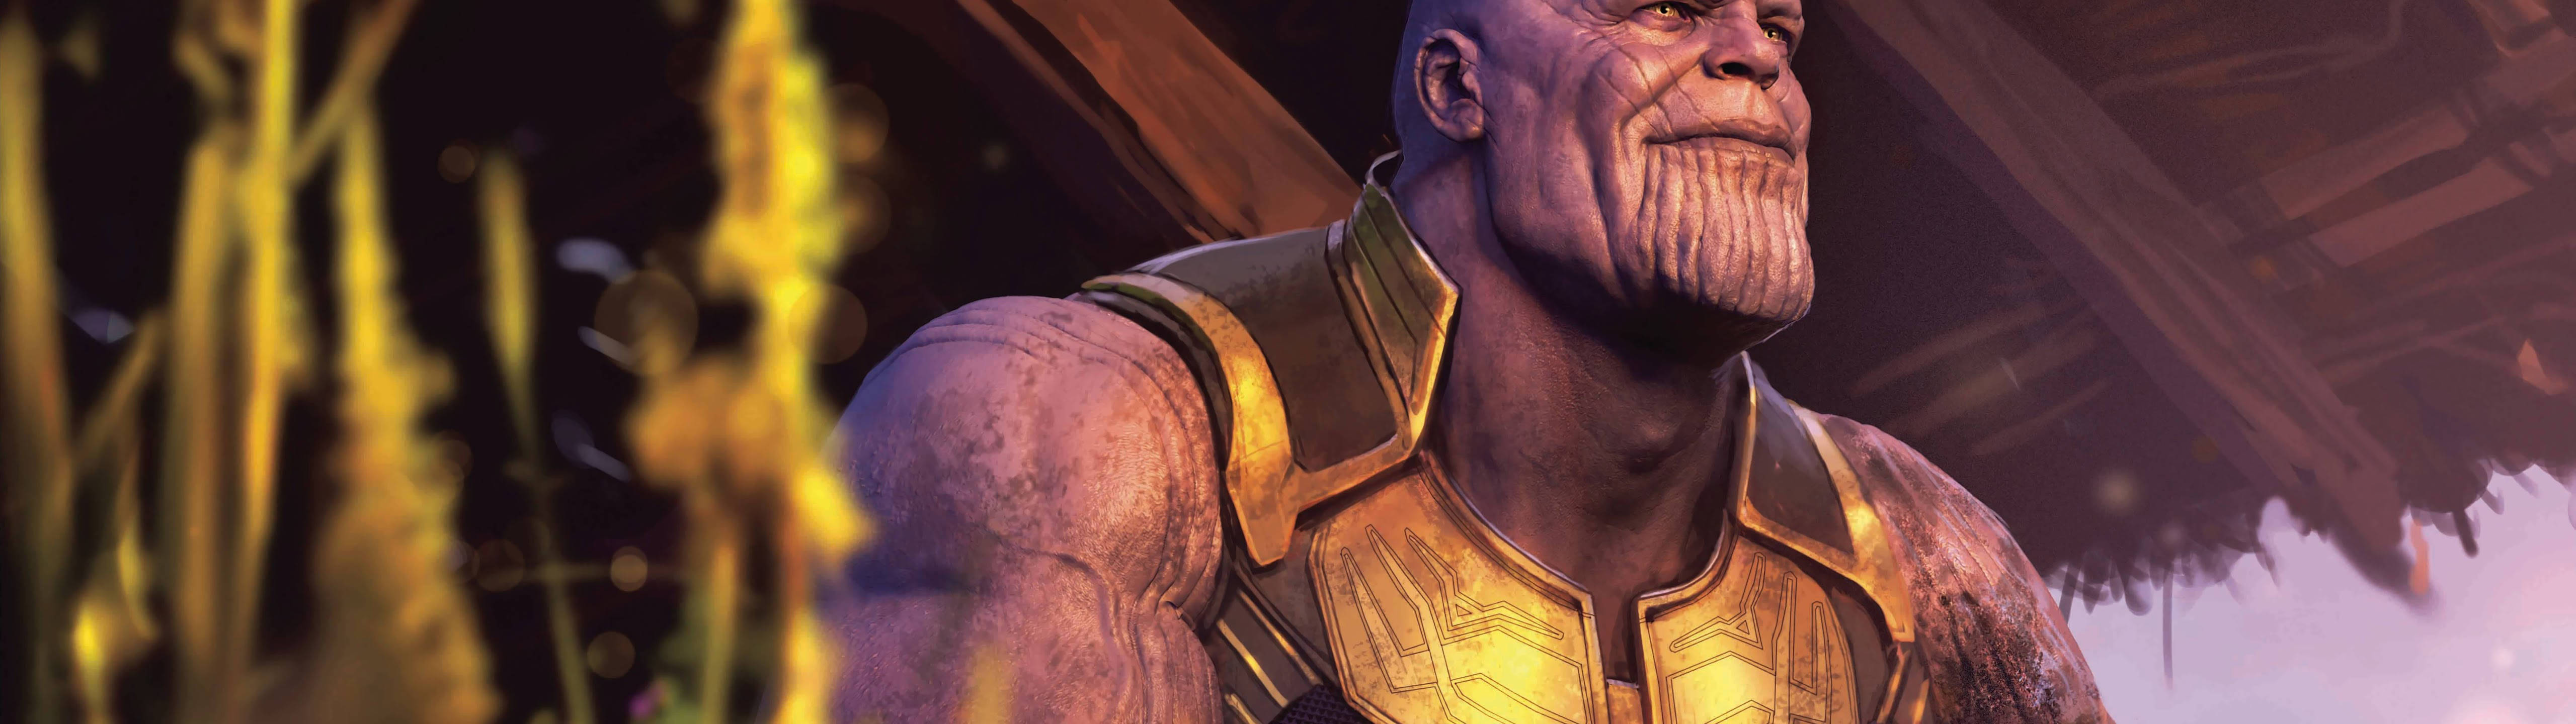 Marvel's Supervillain Thanos 5120 x 1440 Wallpaper